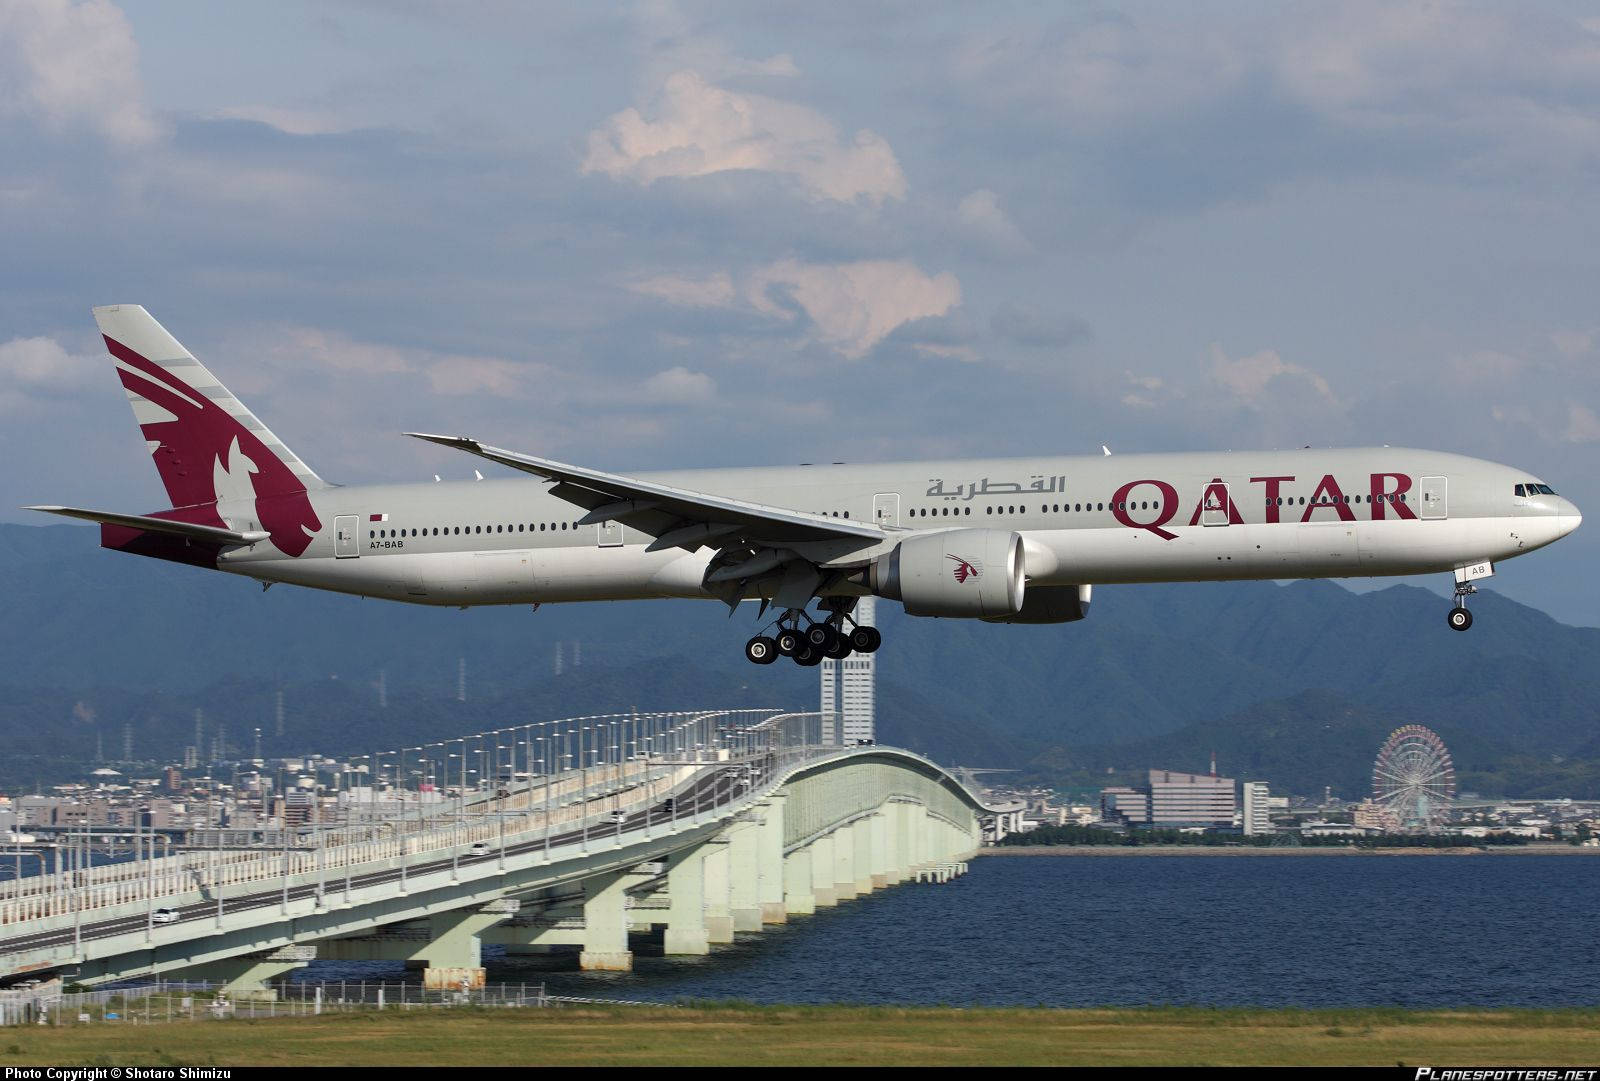 Qatar Aircraft Takes Off